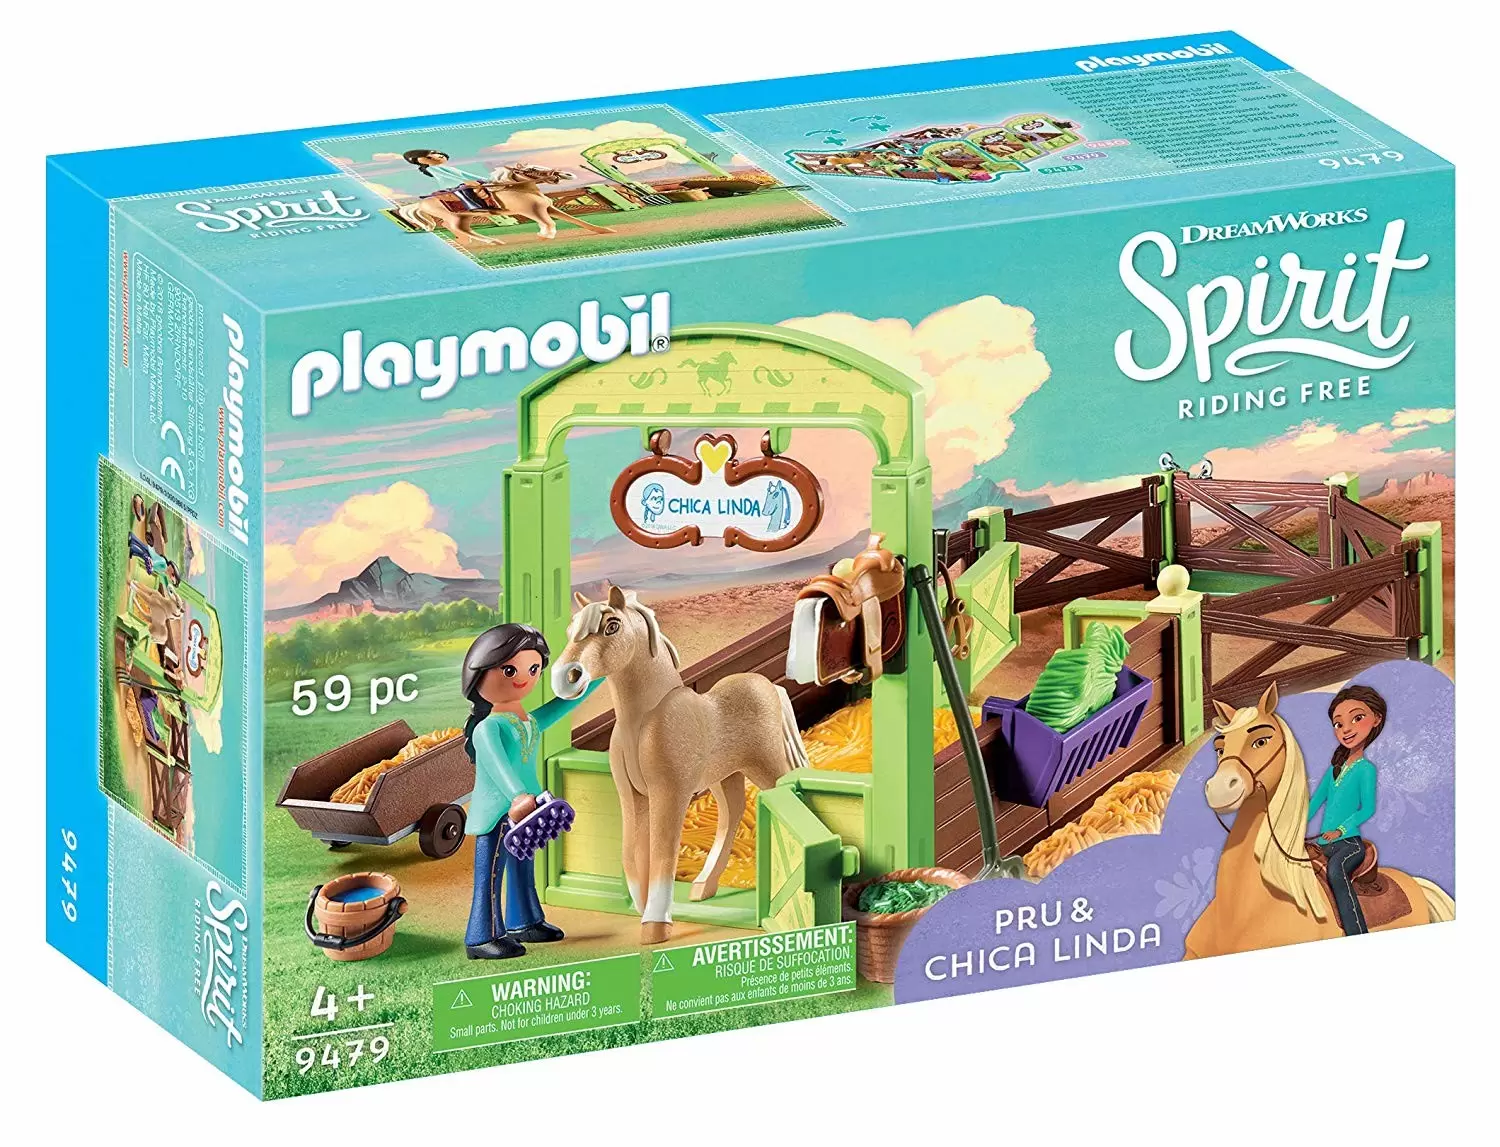 Playmobil Spirit Dreamworks - Pru & Chica Linda with Horse Stall